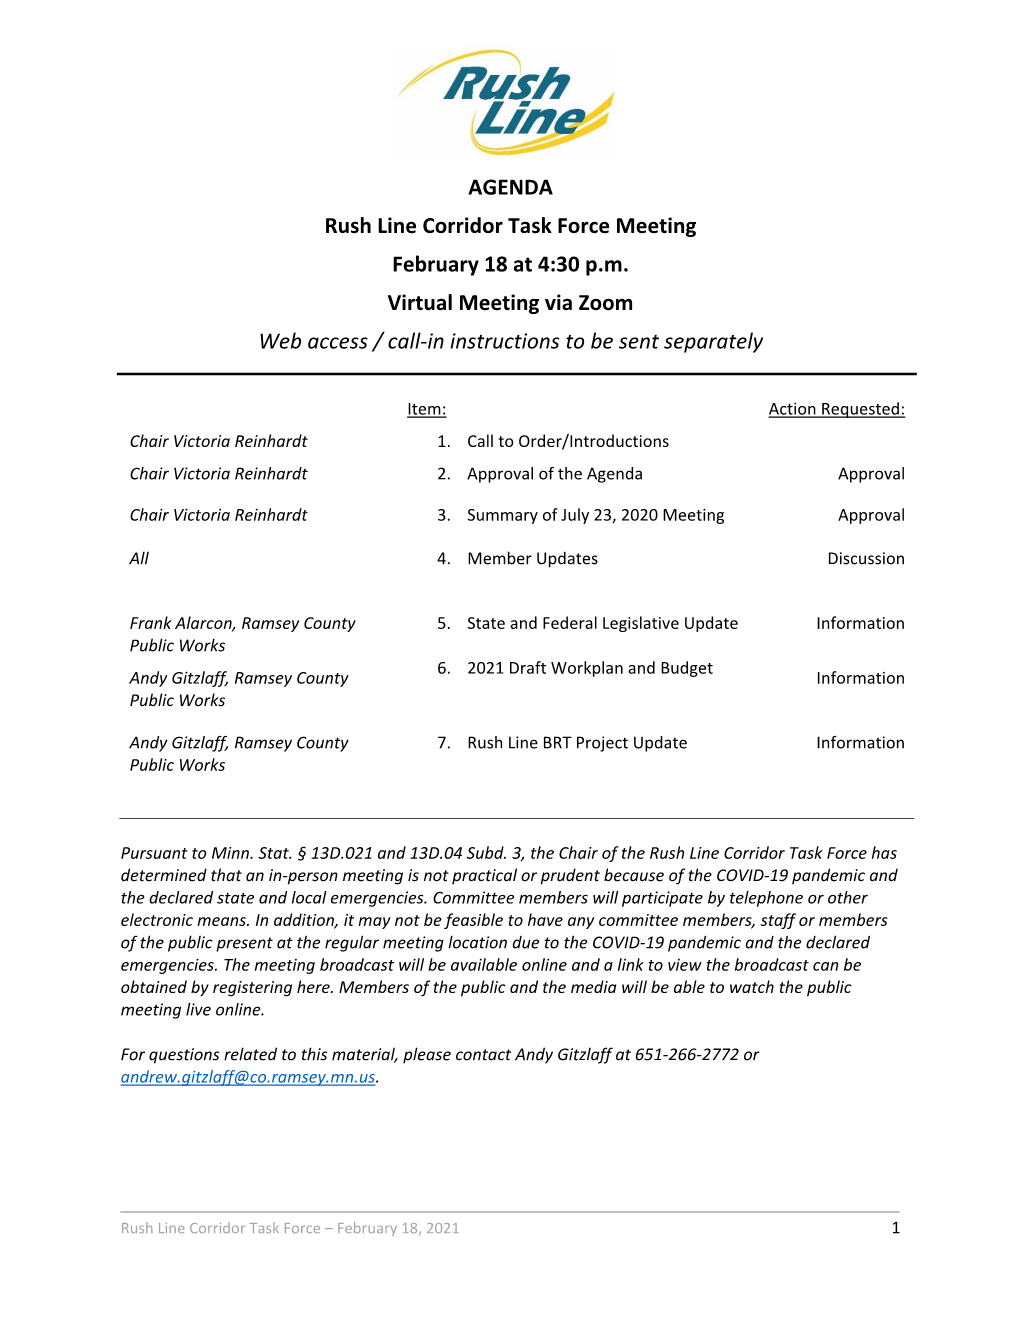 AGENDA Rush Line Corridor Task Force Meeting February 18 at 4:30 P.M